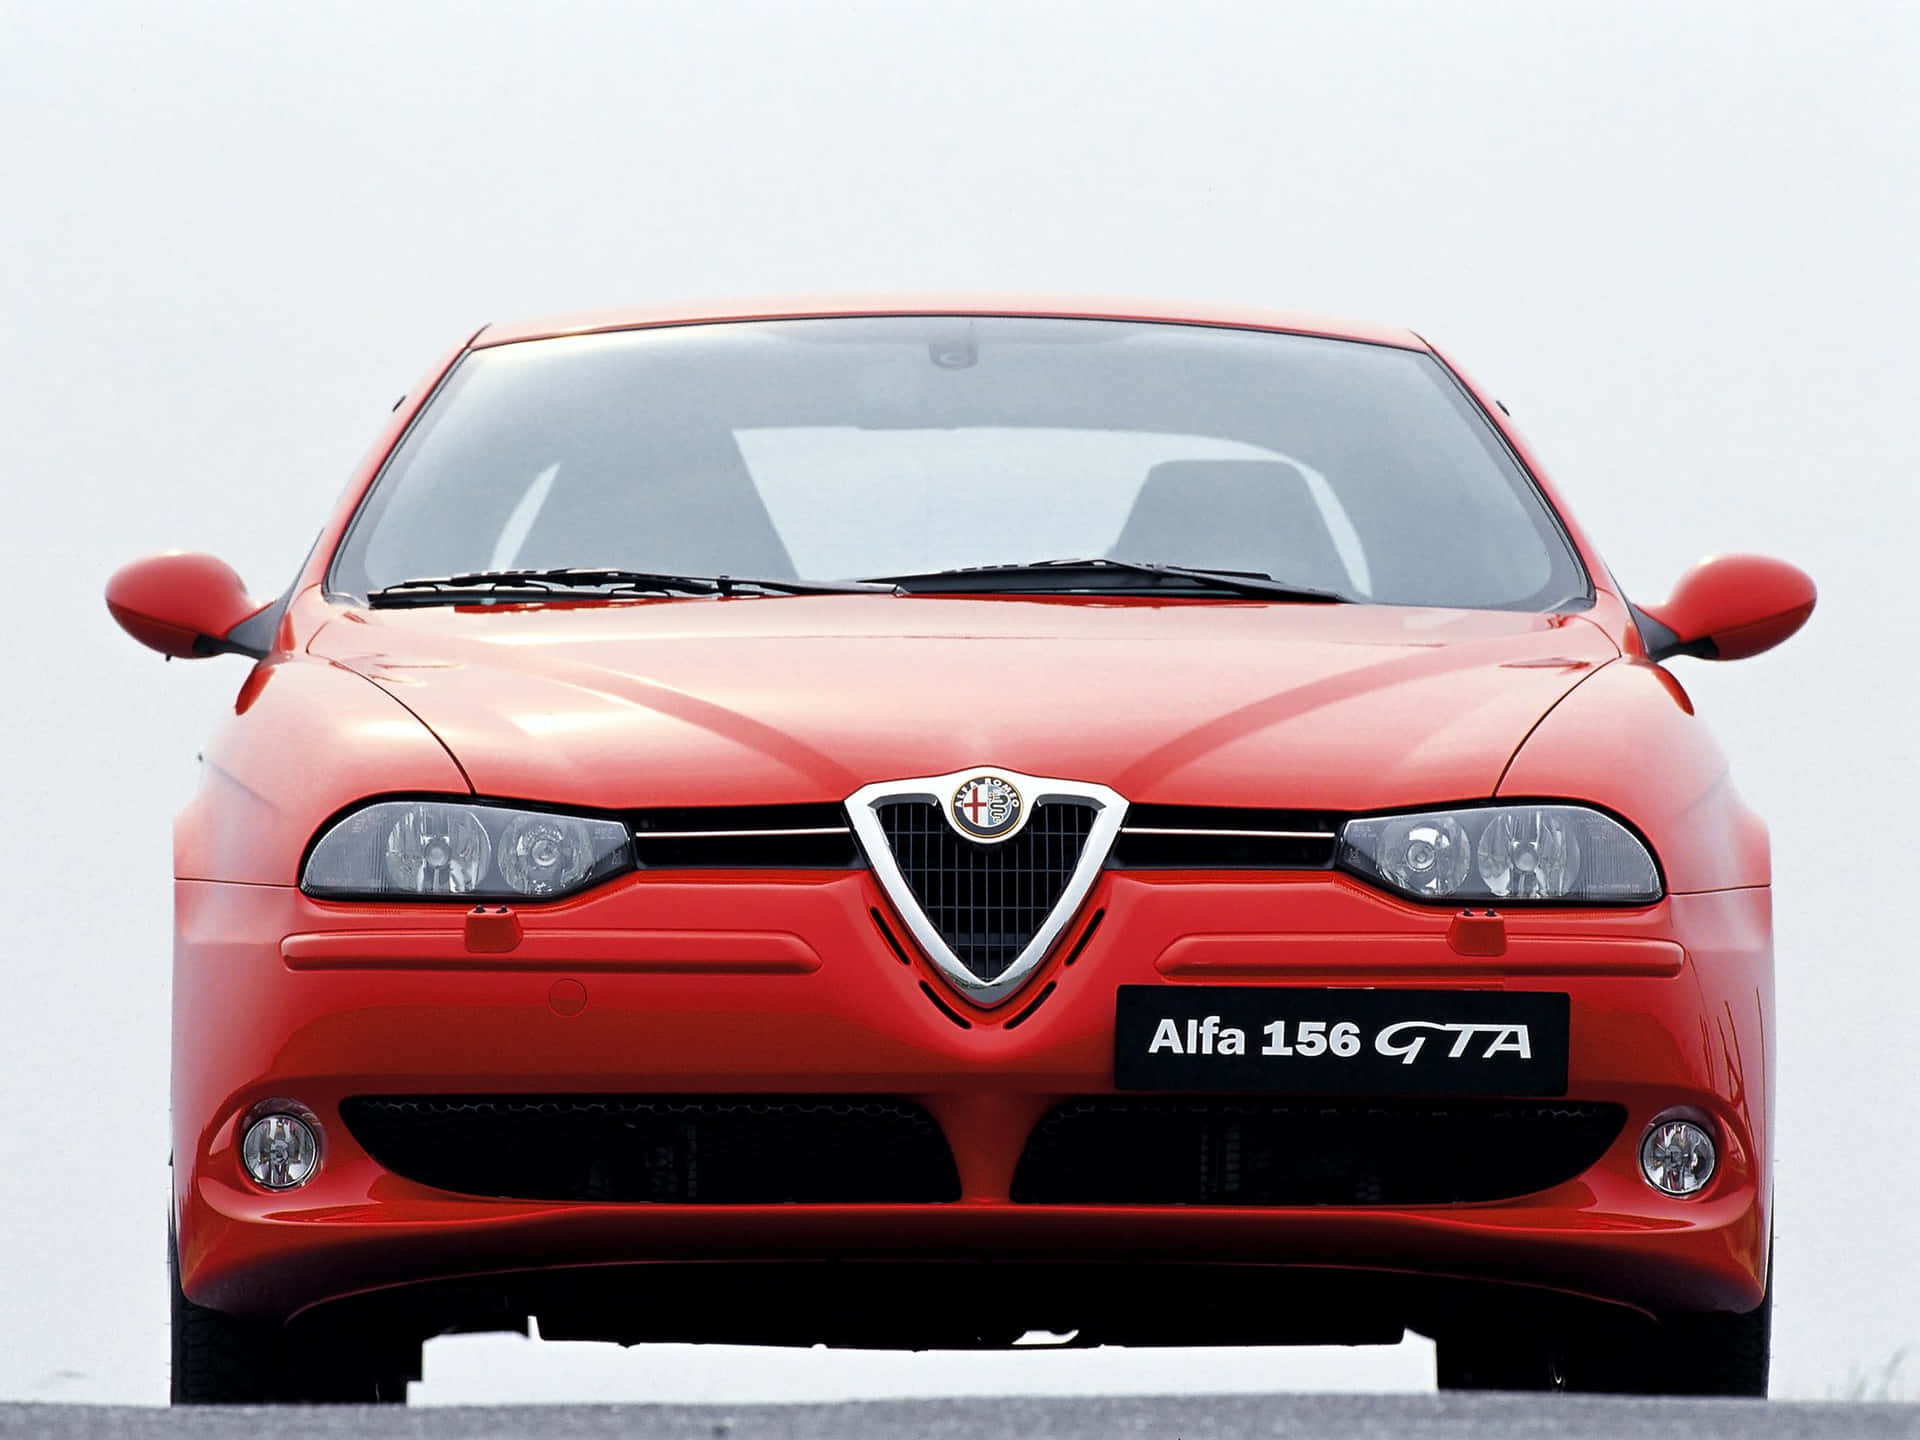 Stunning Alfa Romeo 156 in Motion Wallpaper